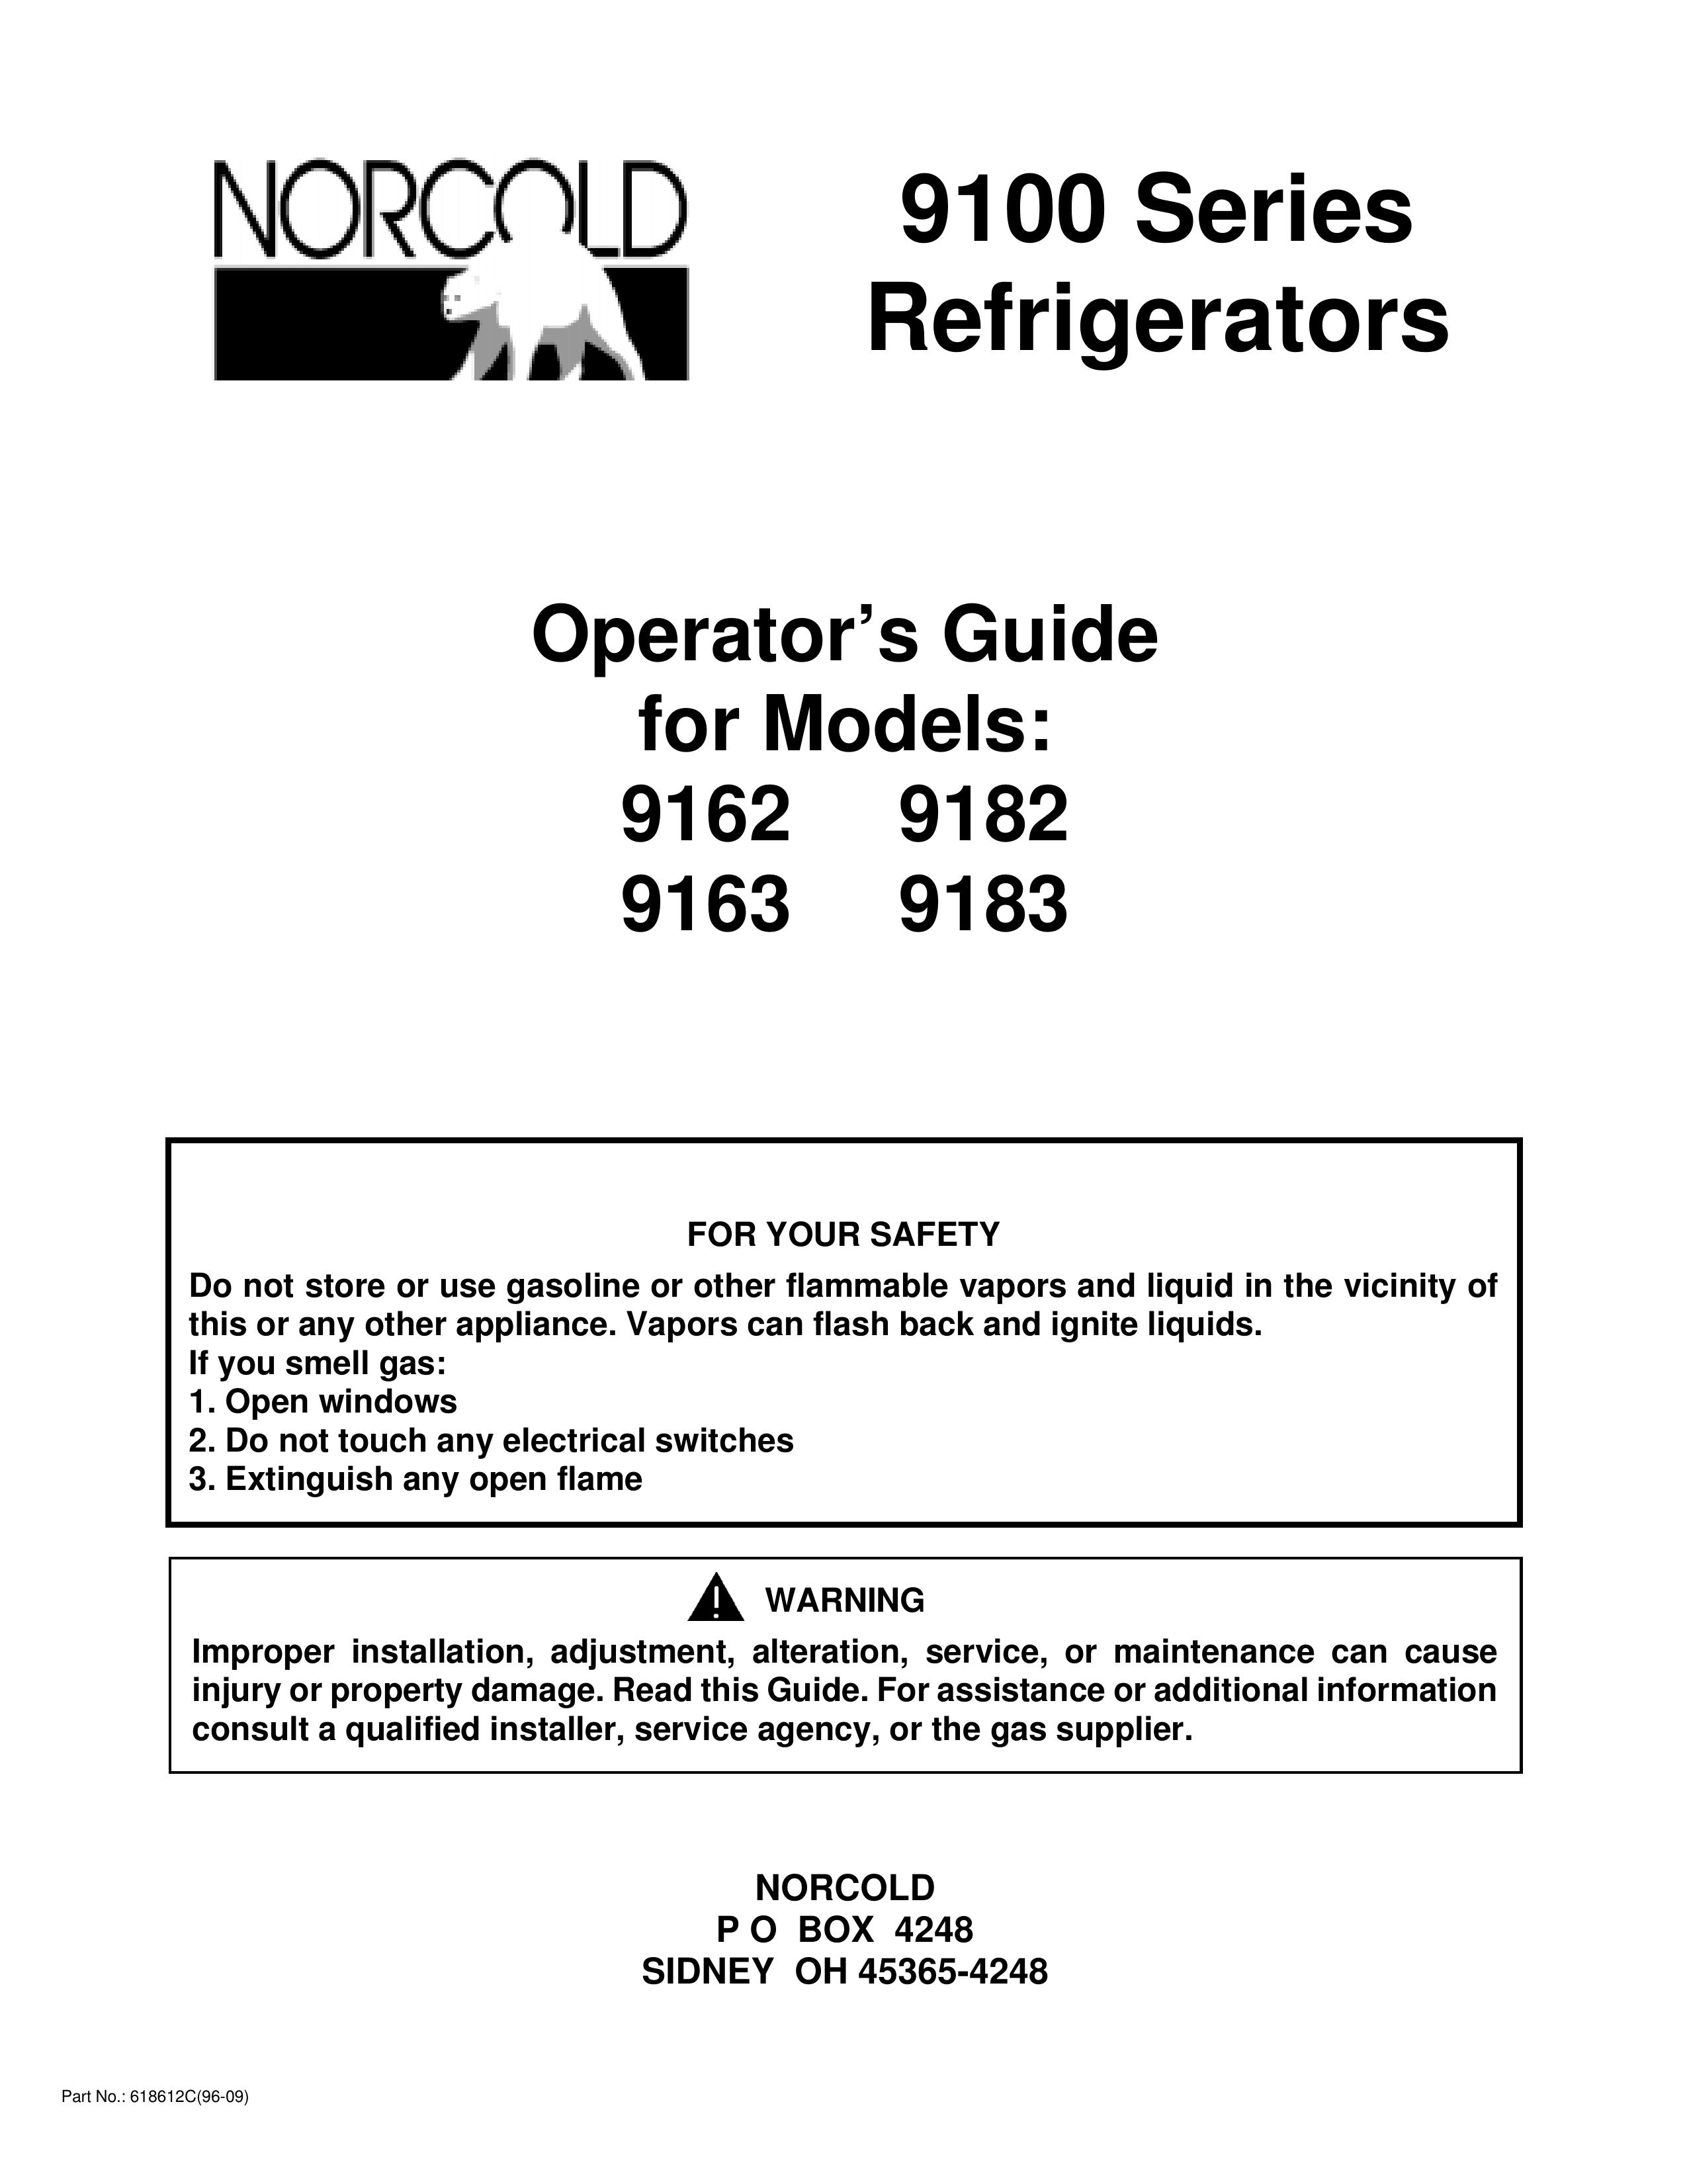 Norcold 9163 Refrigerator User Manual